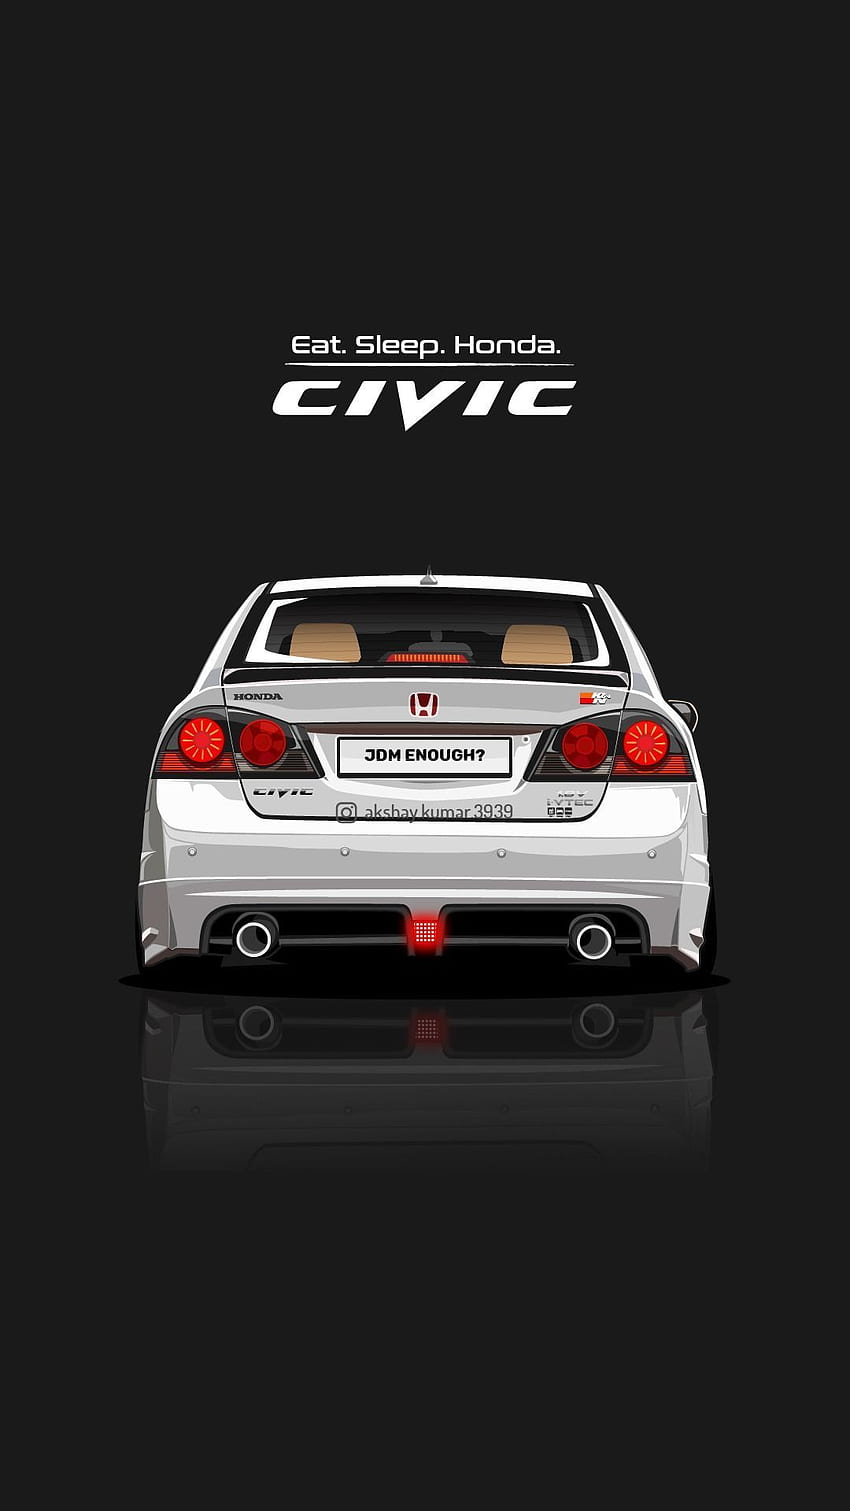 Eat Sleep Honda Civic, JDM Civic HD phone wallpaper